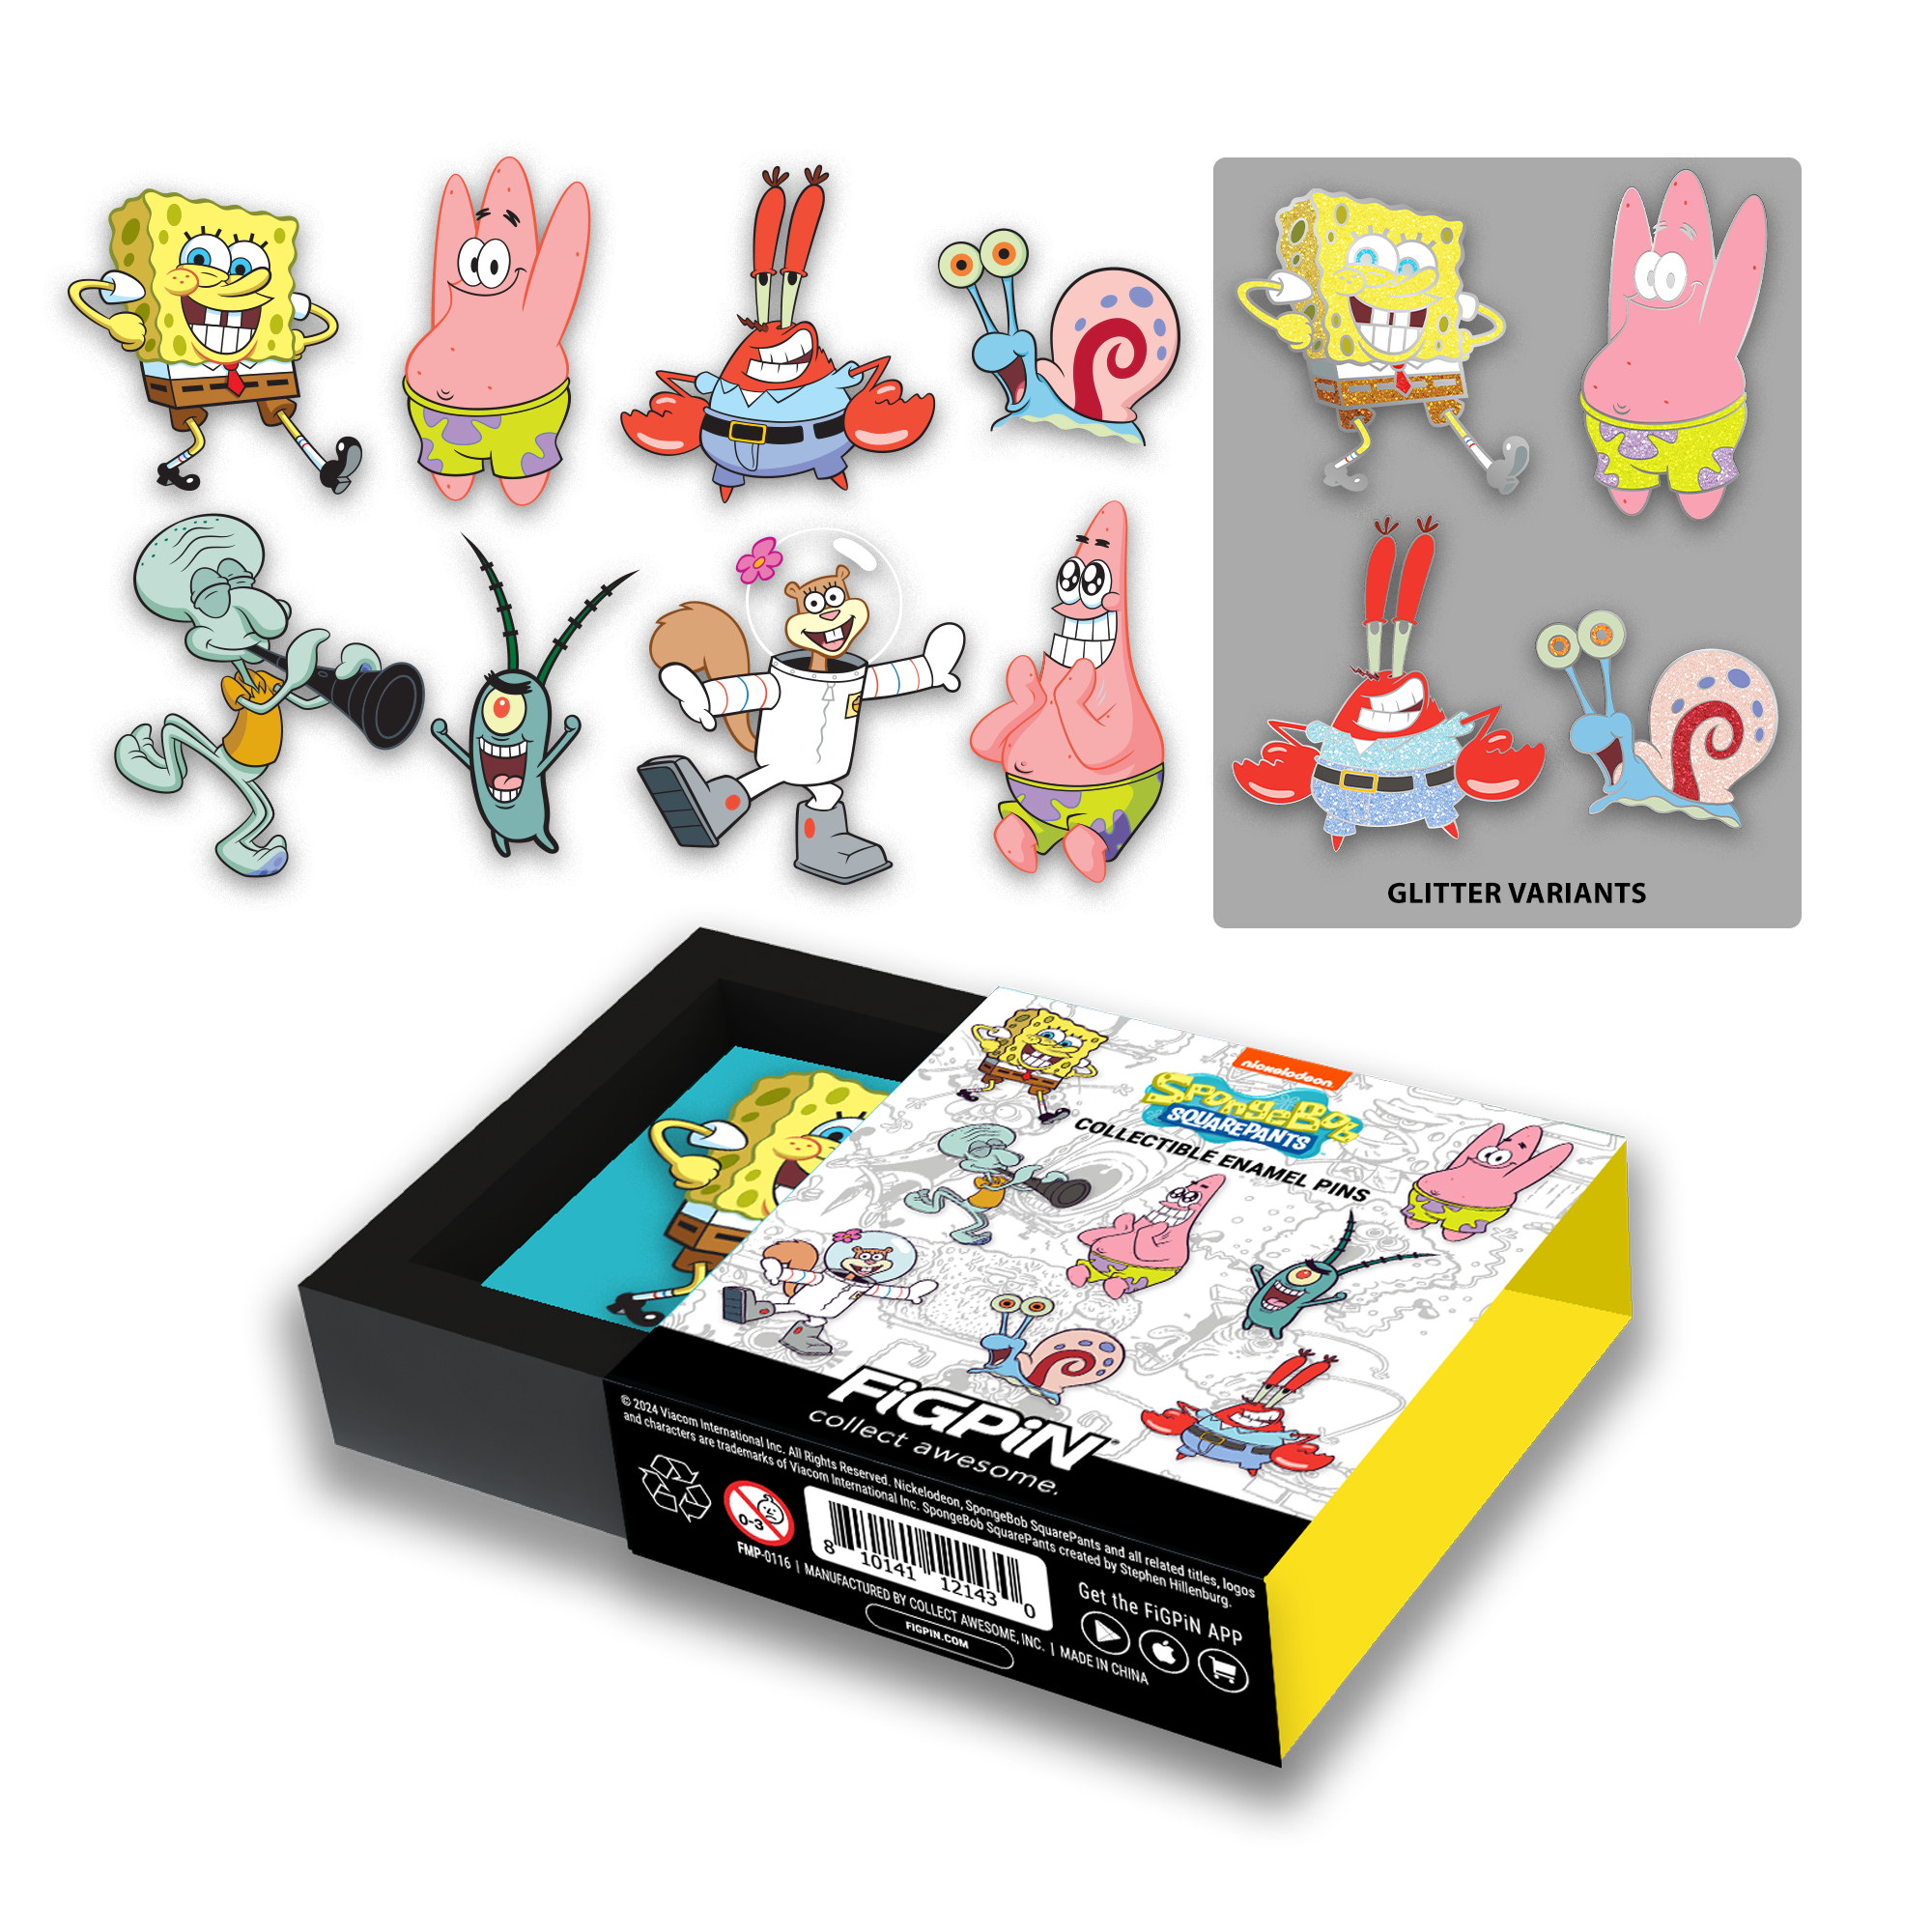 Individual SpongeBob Squarepants Mystery Minis blind box with 12 art renders of possible SpongeBob Squarepants characters above the box